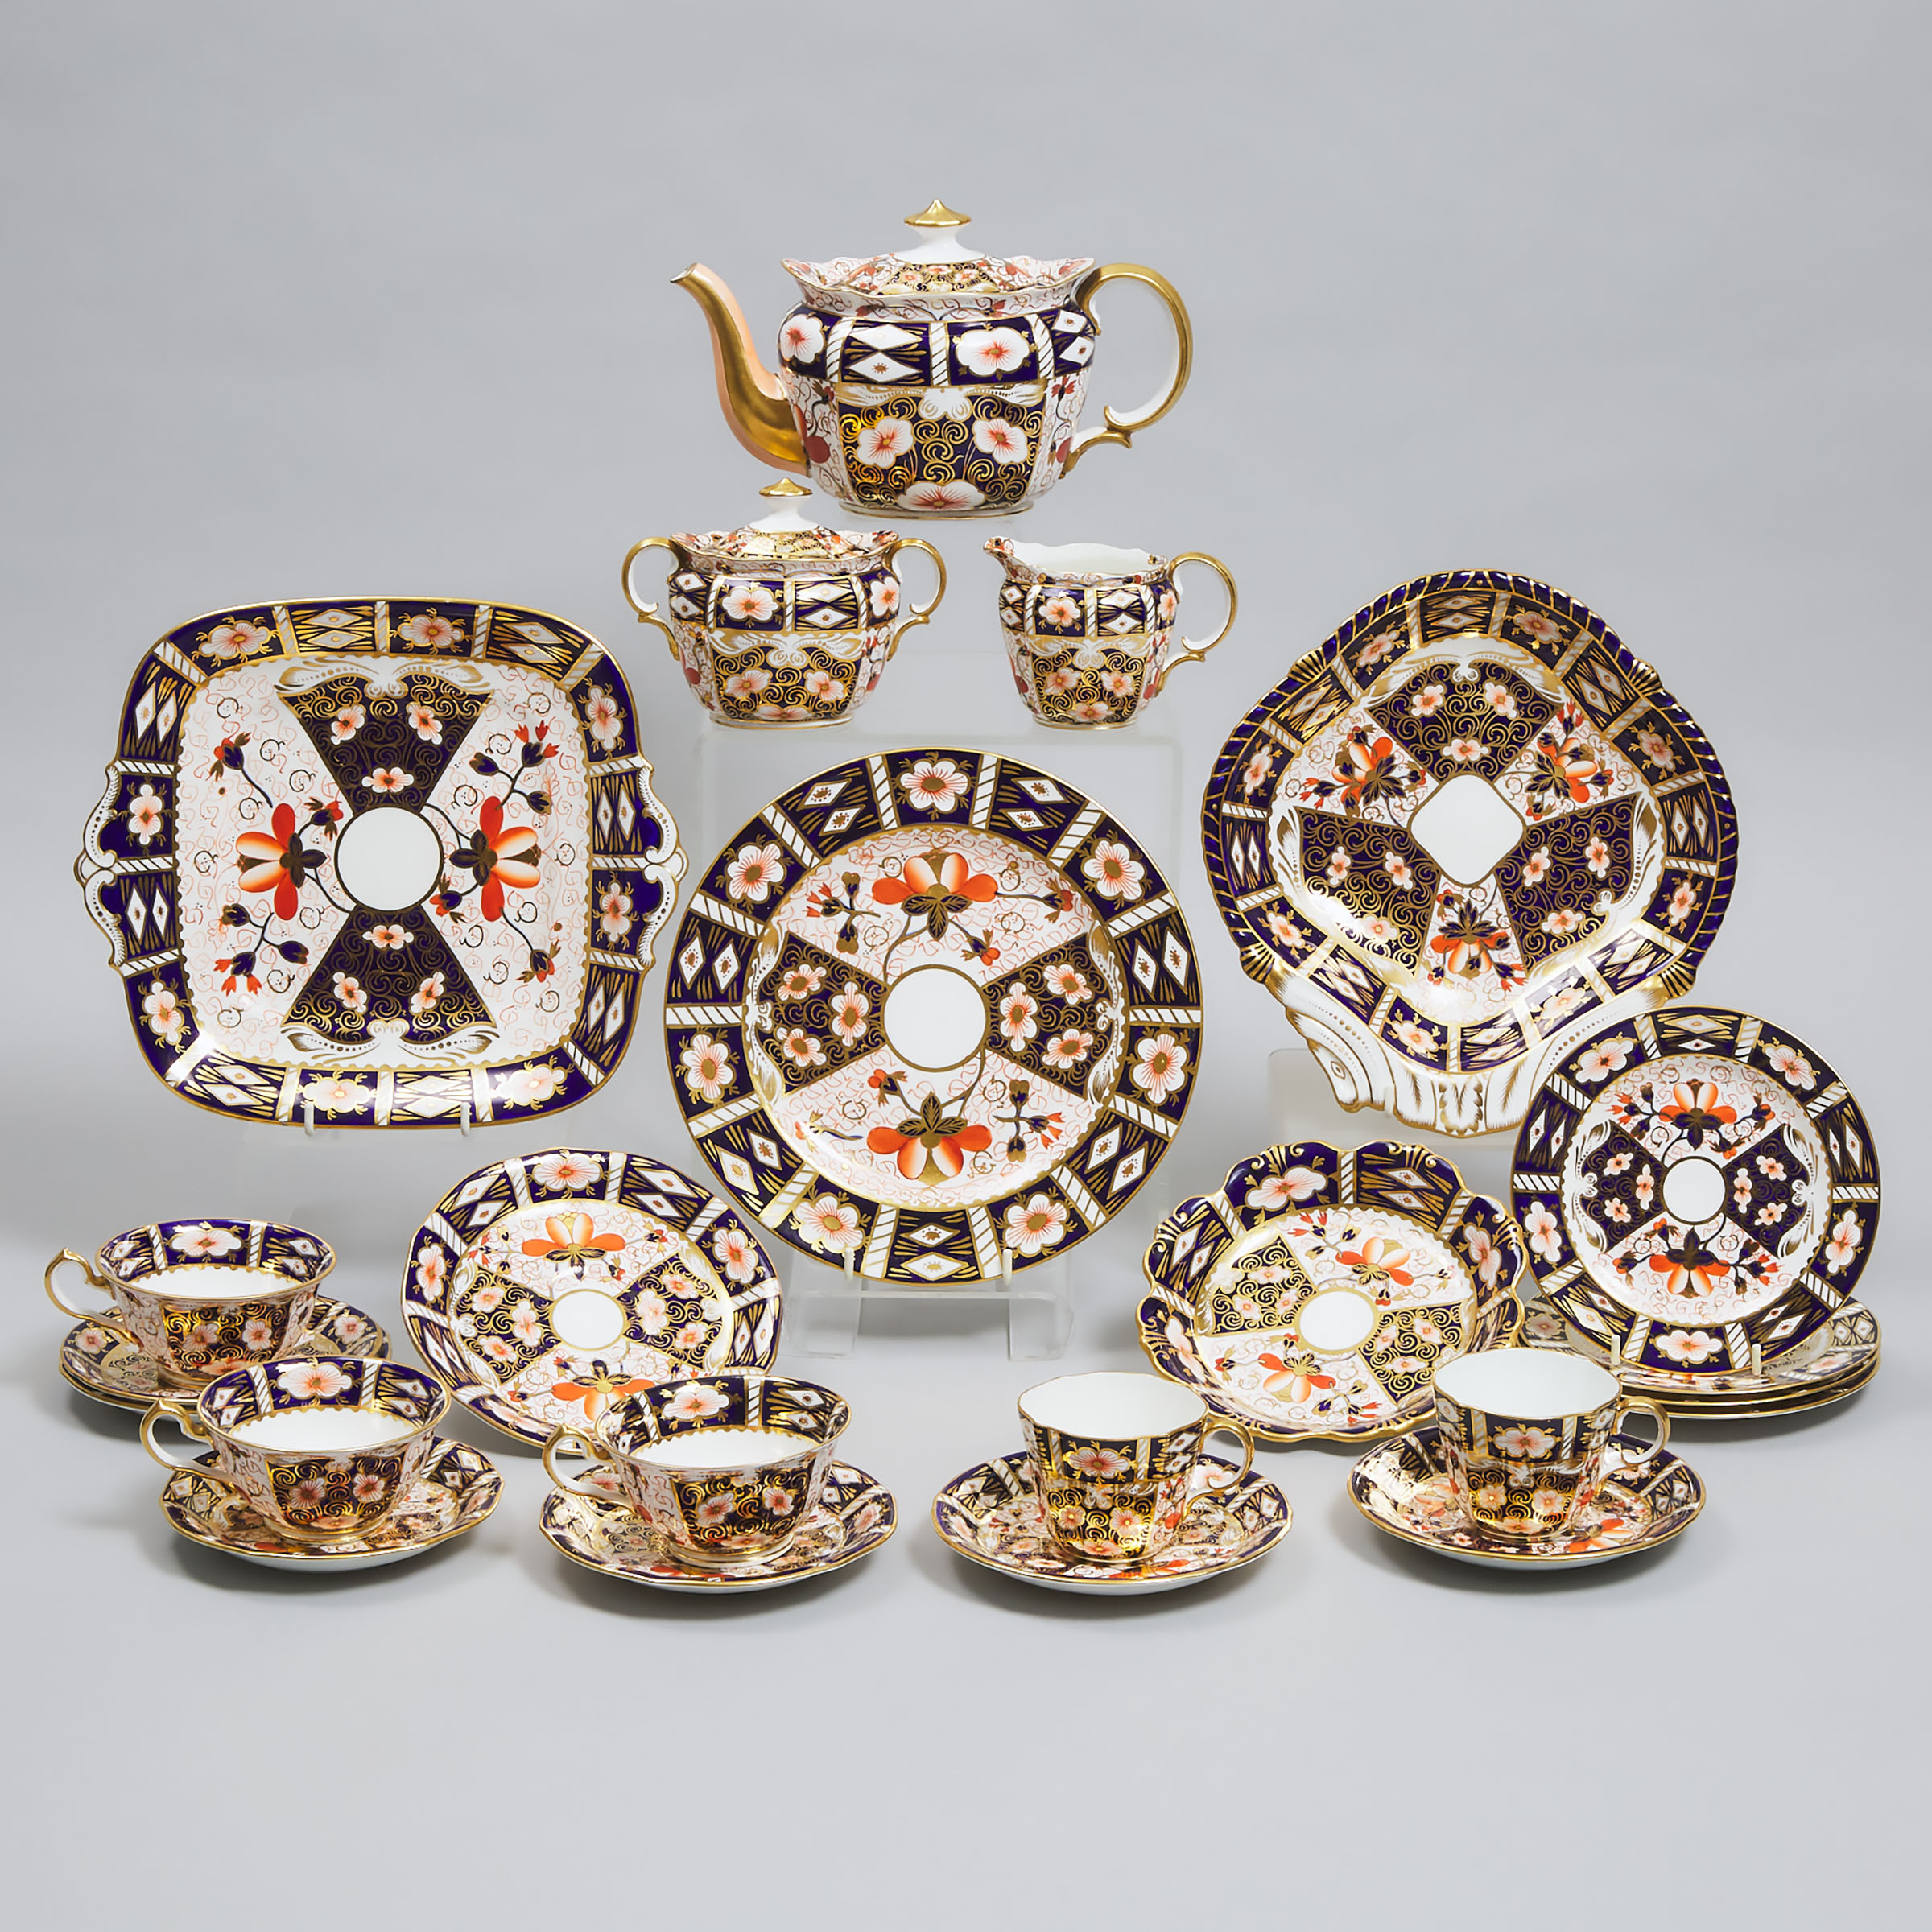 Royal Crown Derby 'Imari' (2451) Pattern Part Service, 20th century